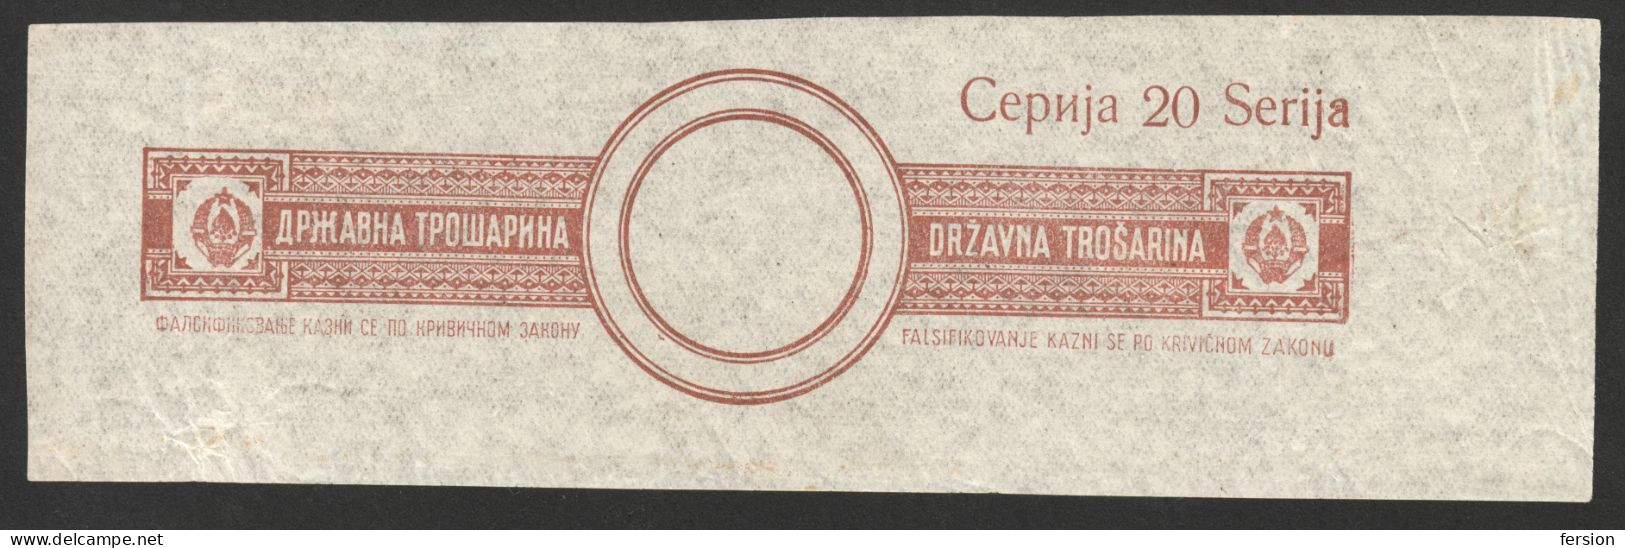 Yugoslavia 1945 EXCISE Revenue Fiscal Luxury Tax CONTROL BAND Stamp / Stripe Seal - Ser. No. 20 - Coat Of Arms - Servizio